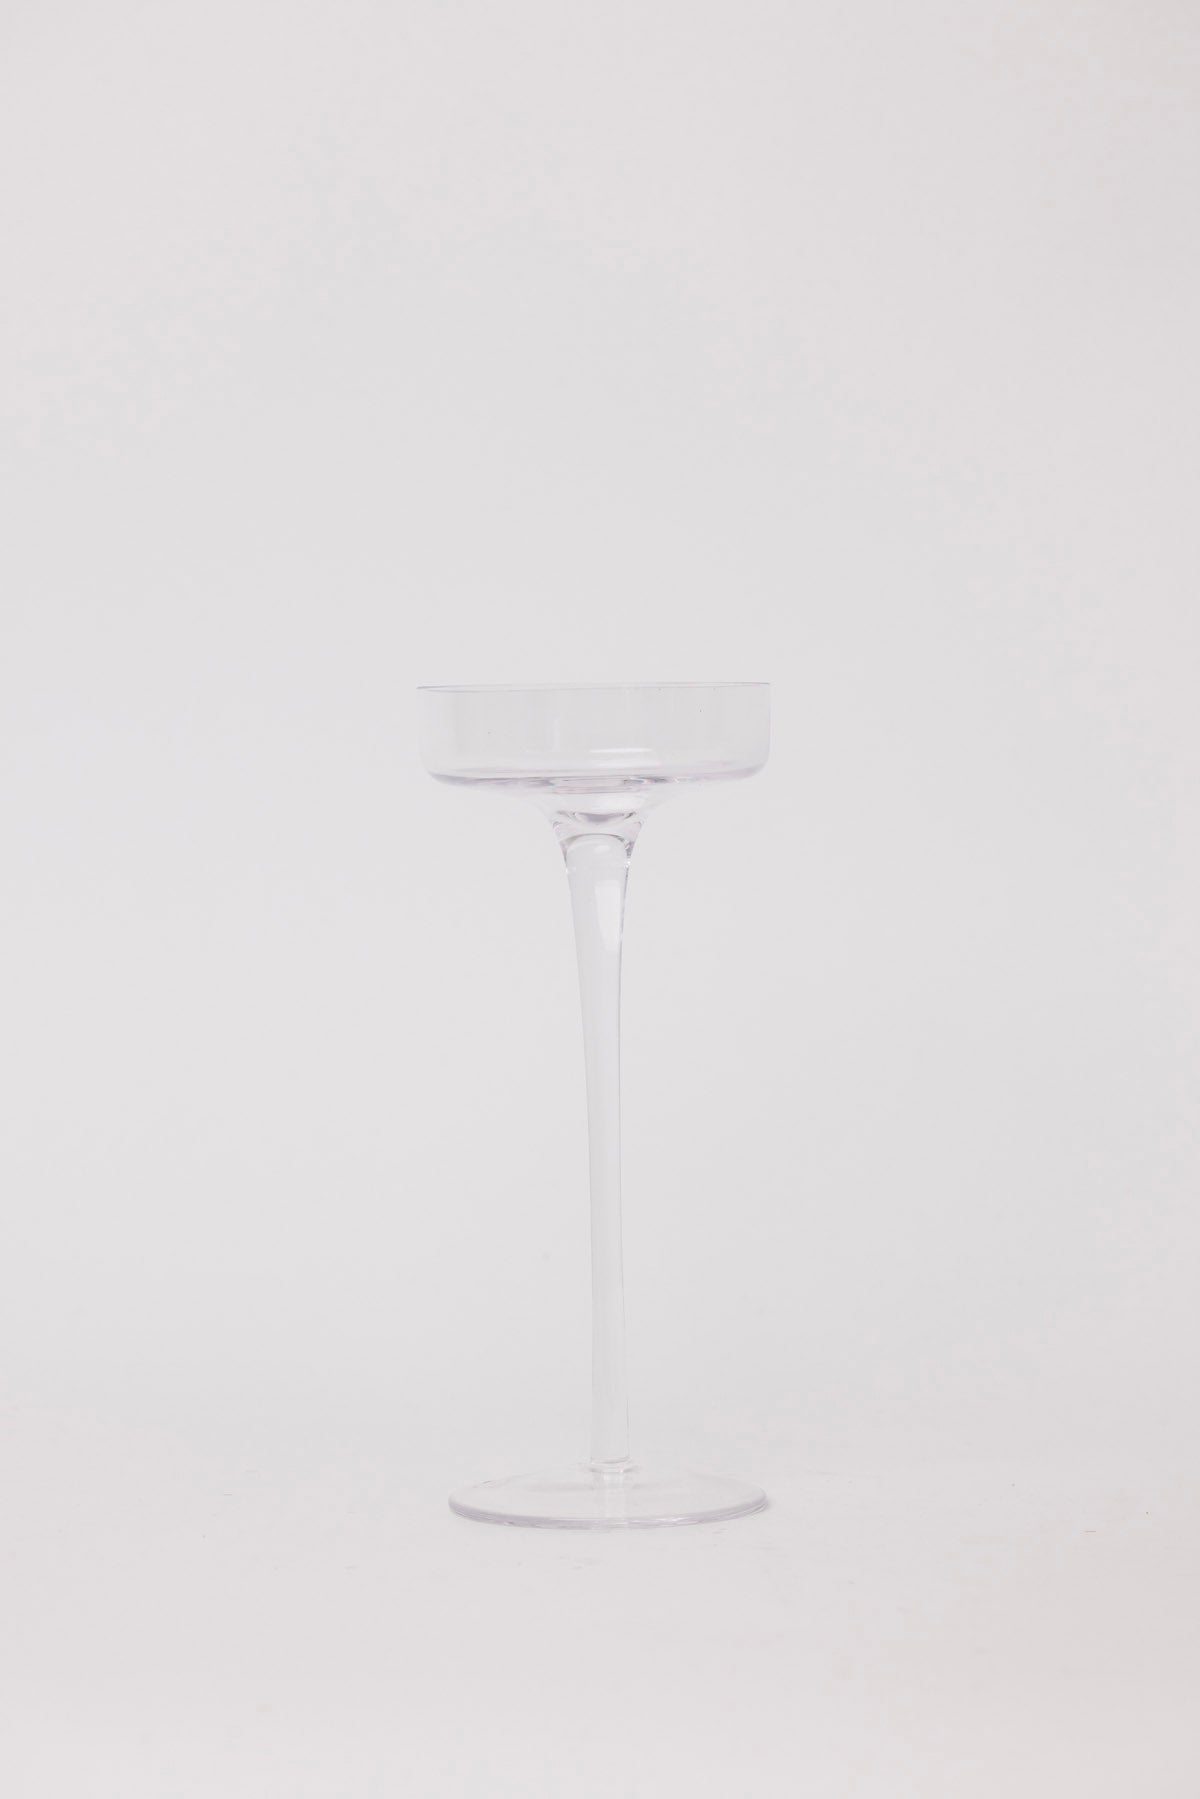 Lumi Glass Pillar Holder - 2 Sizes